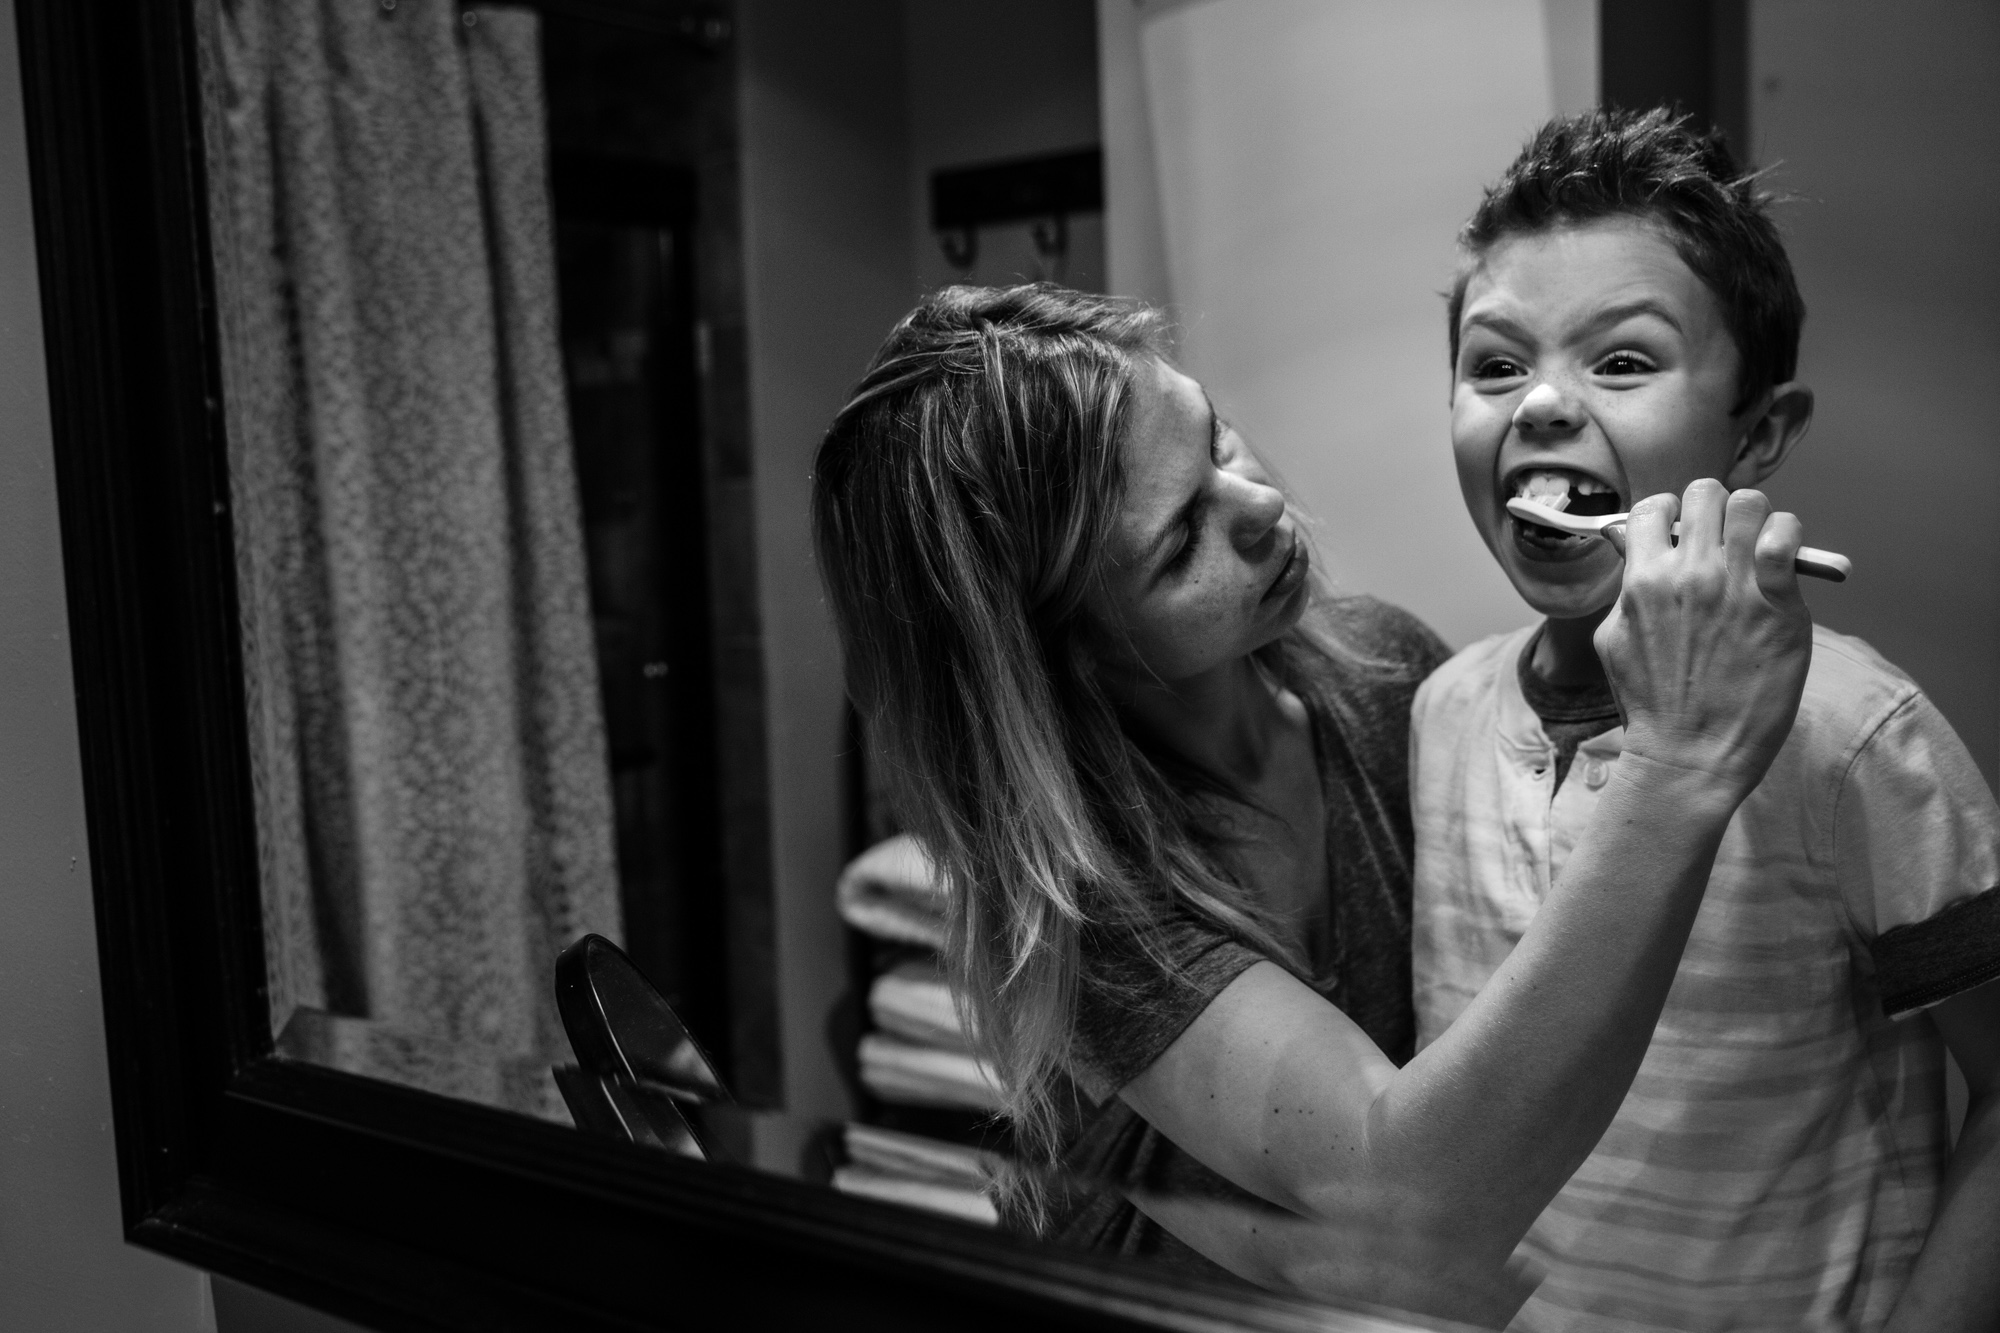 Woman brushes boy's teeth